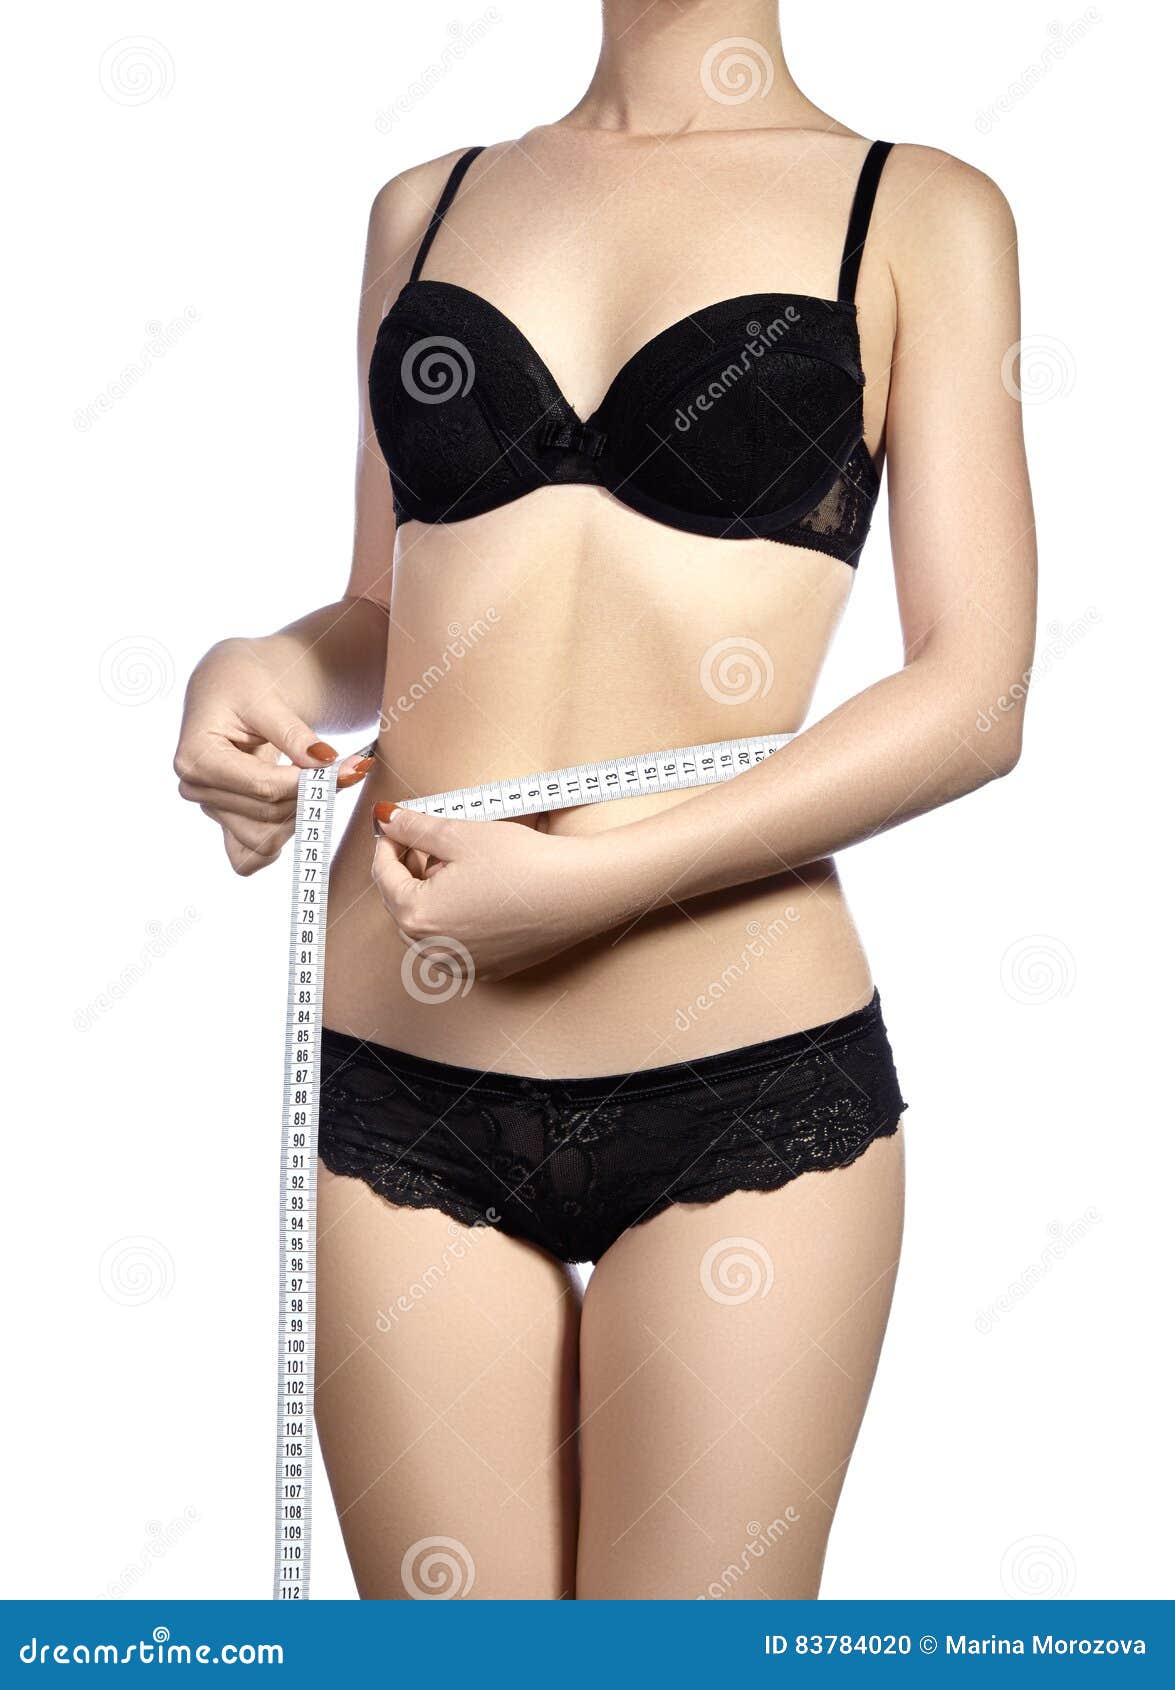 https://thumbs.dreamstime.com/z/fitness-body-measurement-tape-beautiful-athletic-slim-woman-measuring-her-waist-measure-tape-siting-diet-83784020.jpg